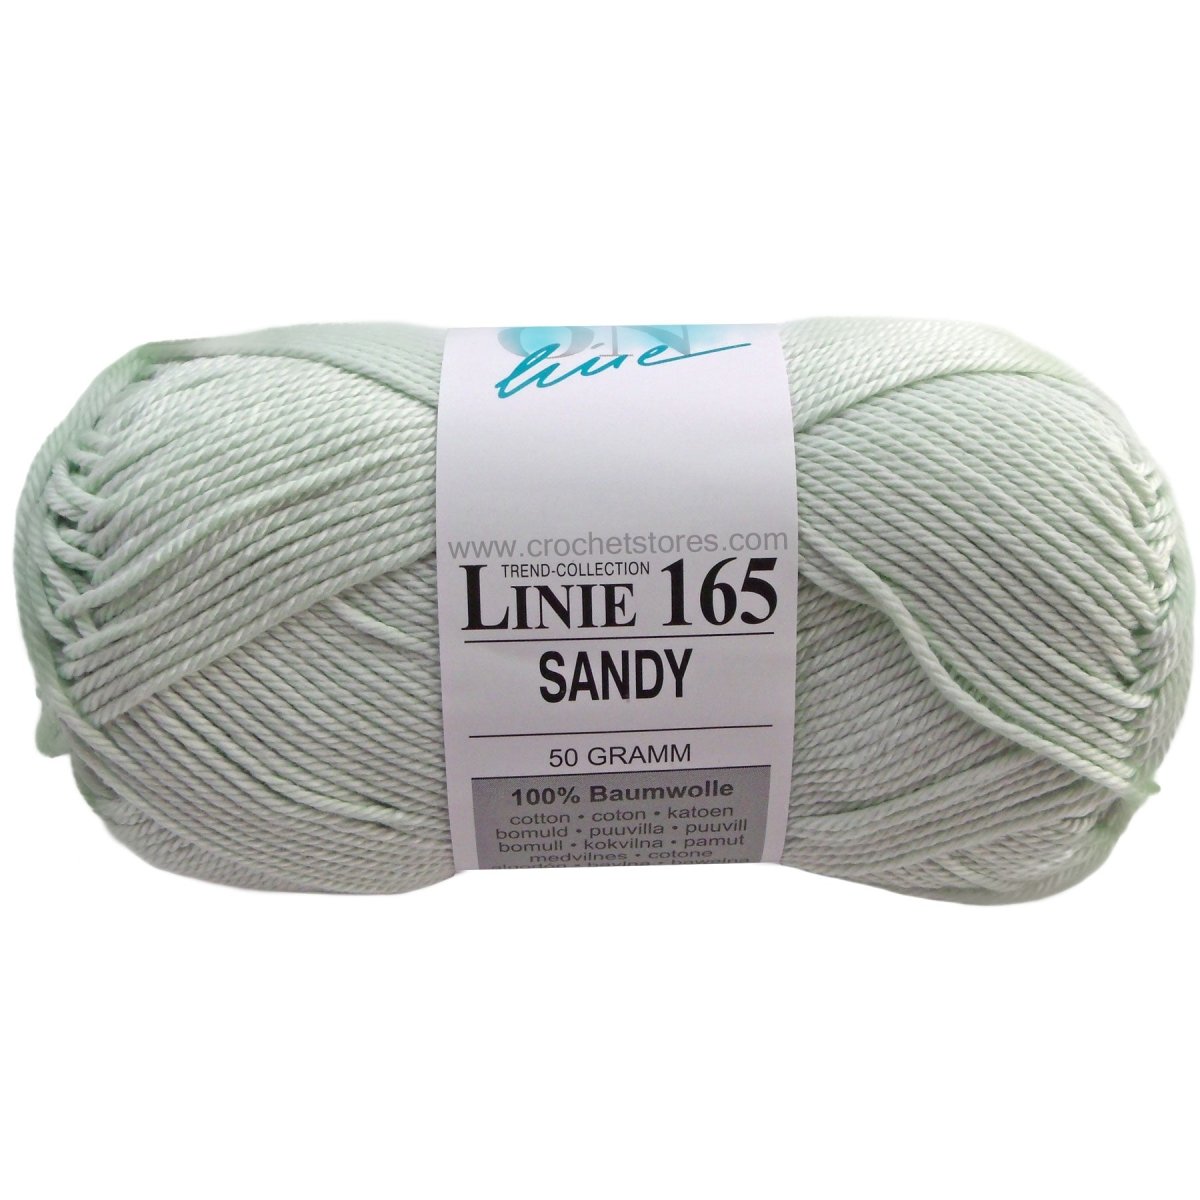 SANDY - Crochetstores110165-00854014366143710